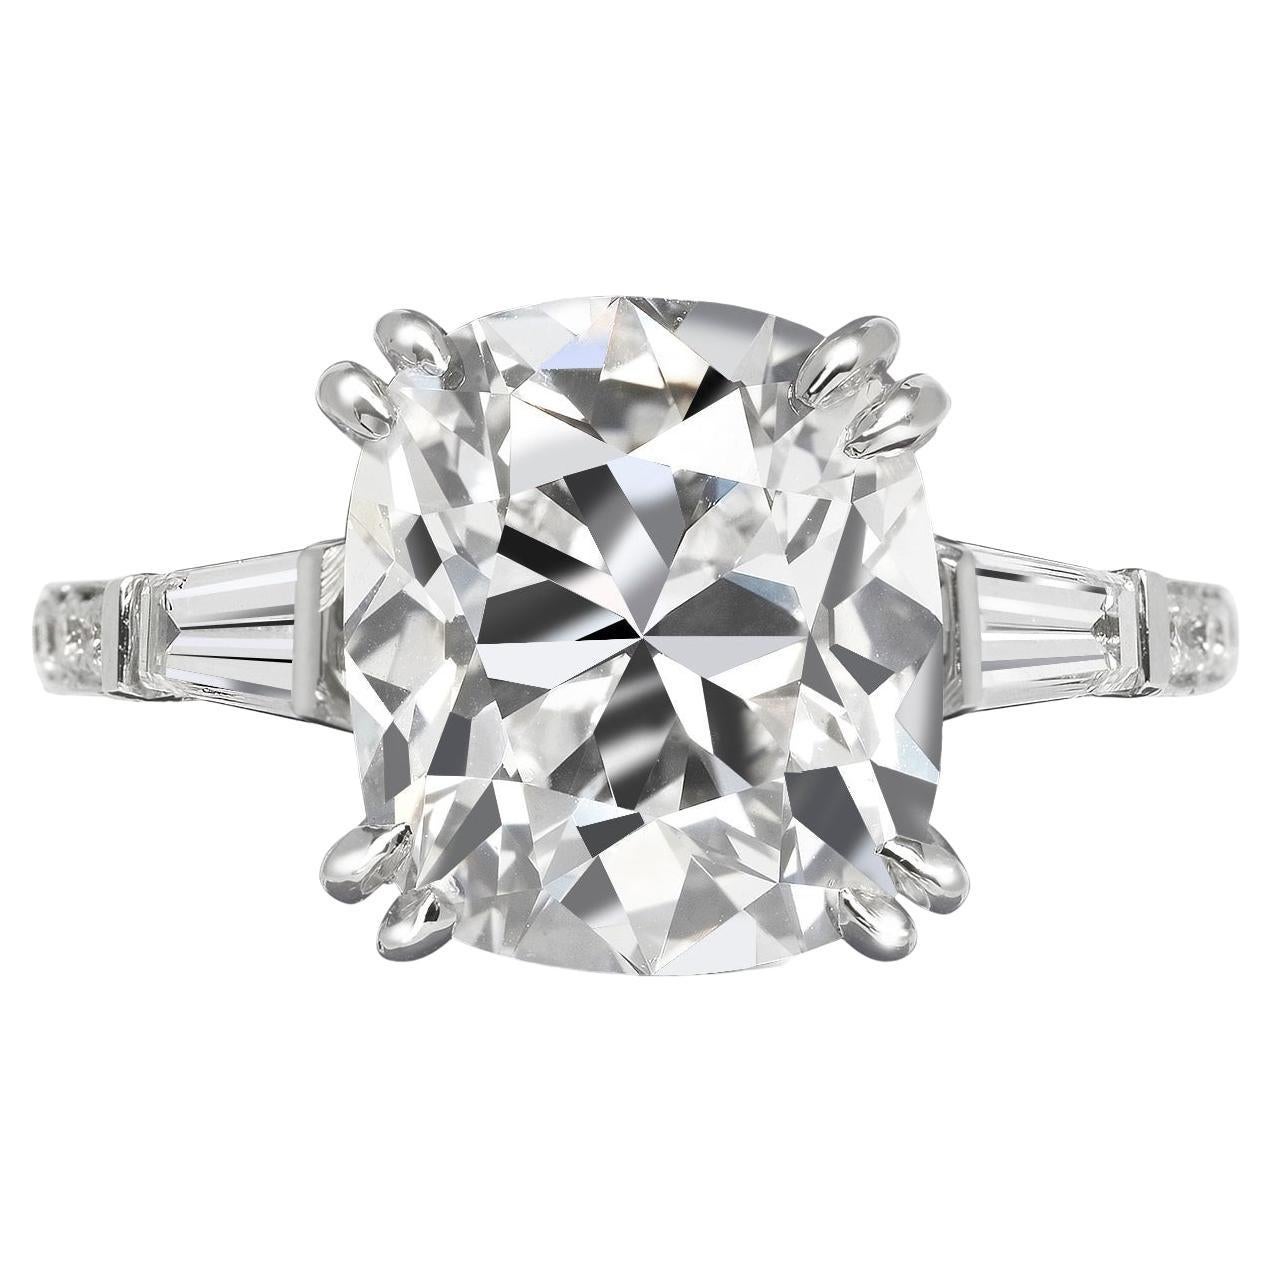 8 Carat Cushion Cut Diamond Engagement Ring GIA Certified E VVS1 For Sale